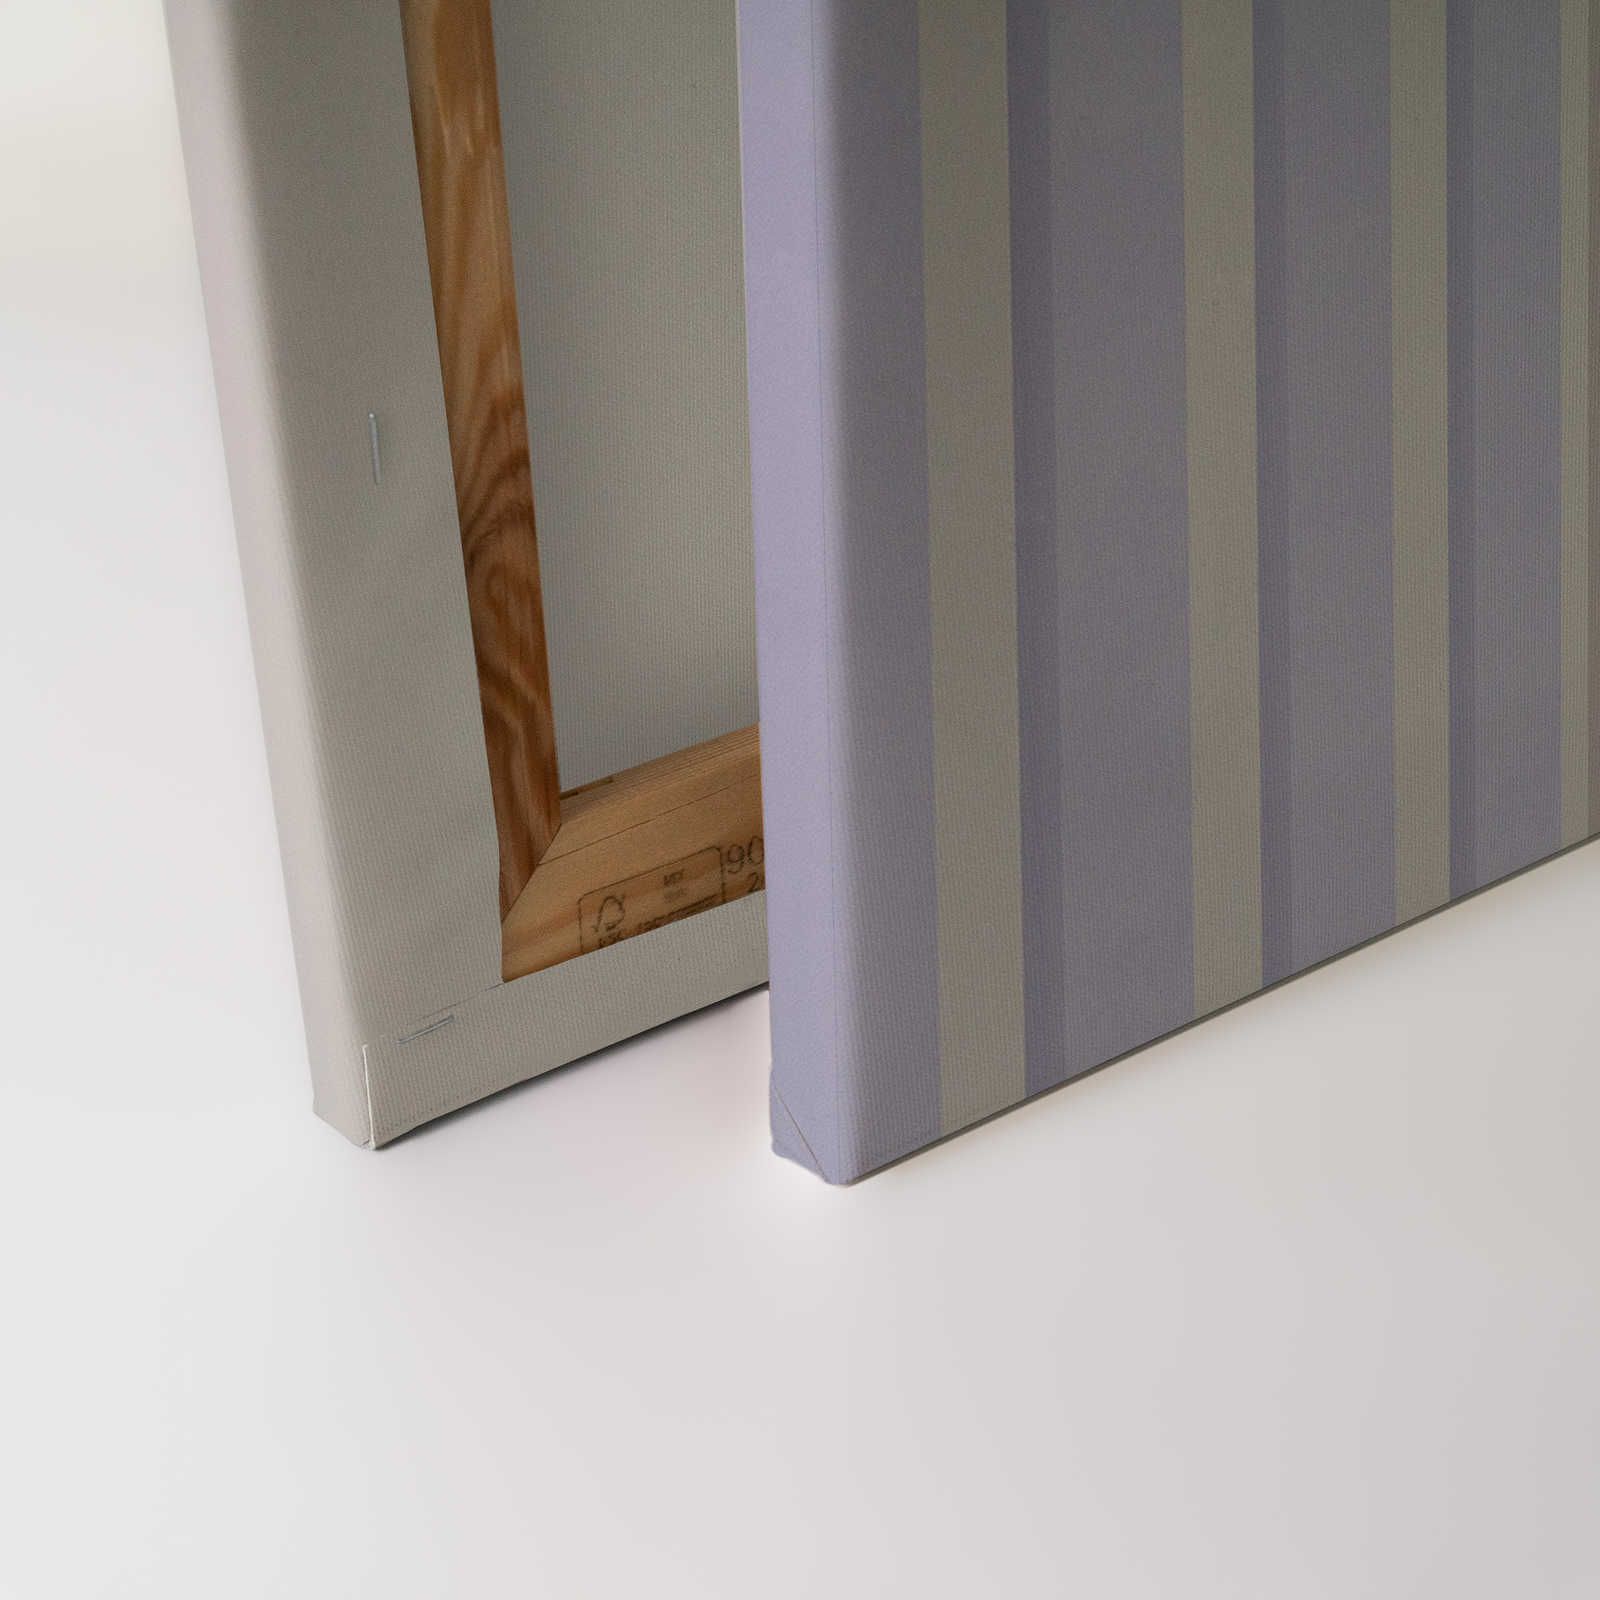             Illusion Room 1 - Leinwandbild 3D Streifen Design in Lila & Grau – 0,90 m x 0,60 m
        